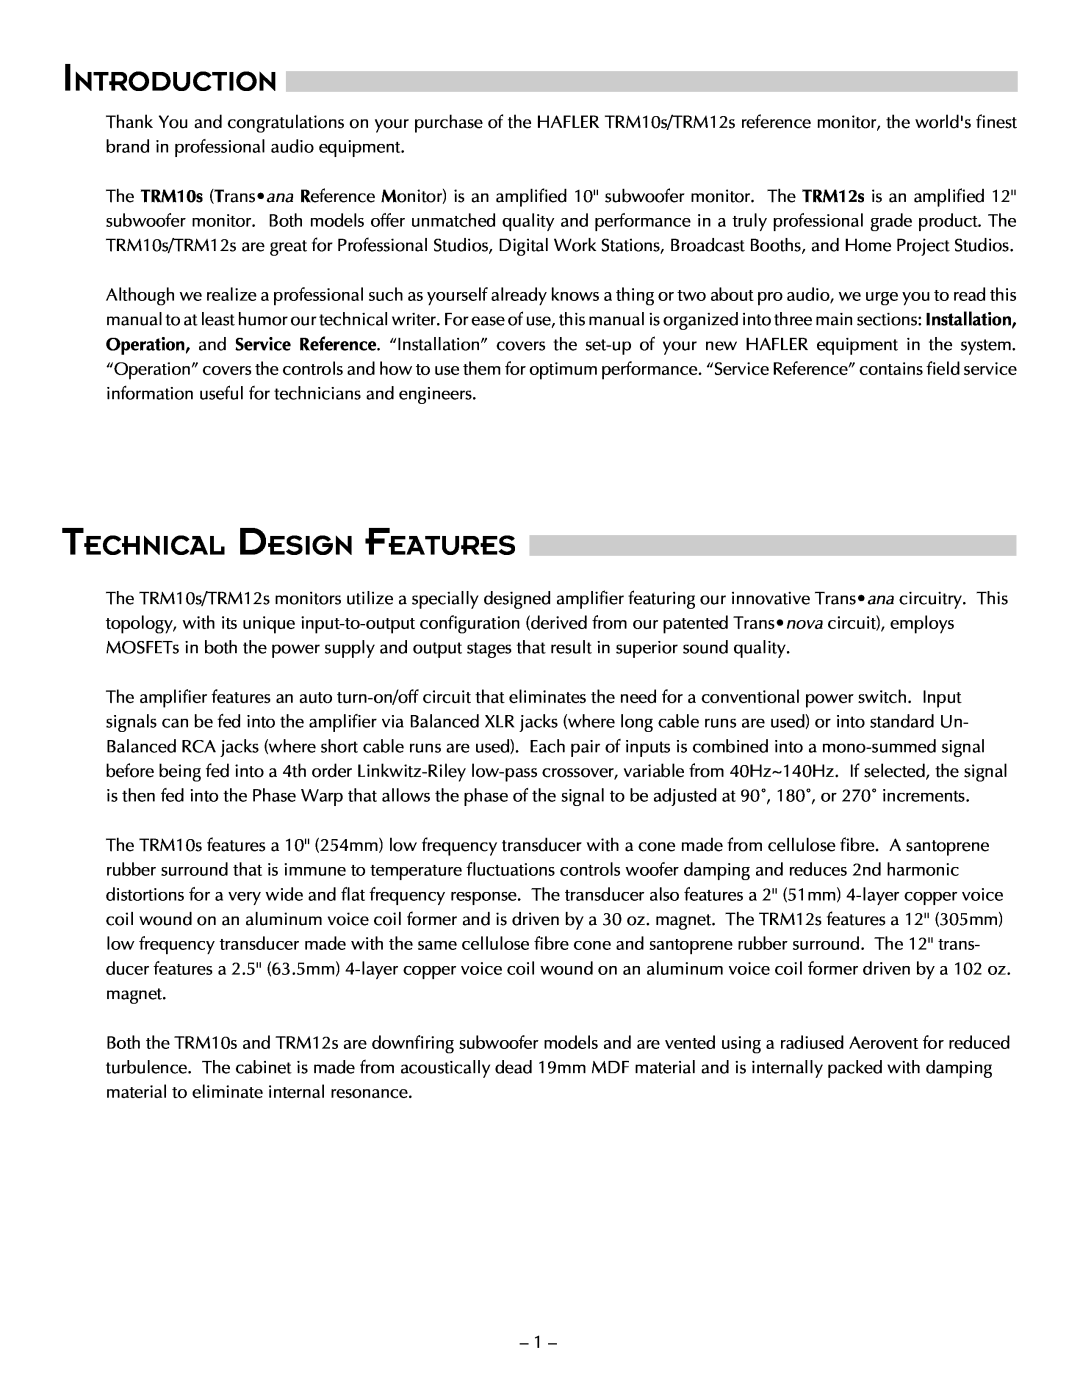 Hafler TRM12S, TRM10S manual Introduction, Technical Design Features 